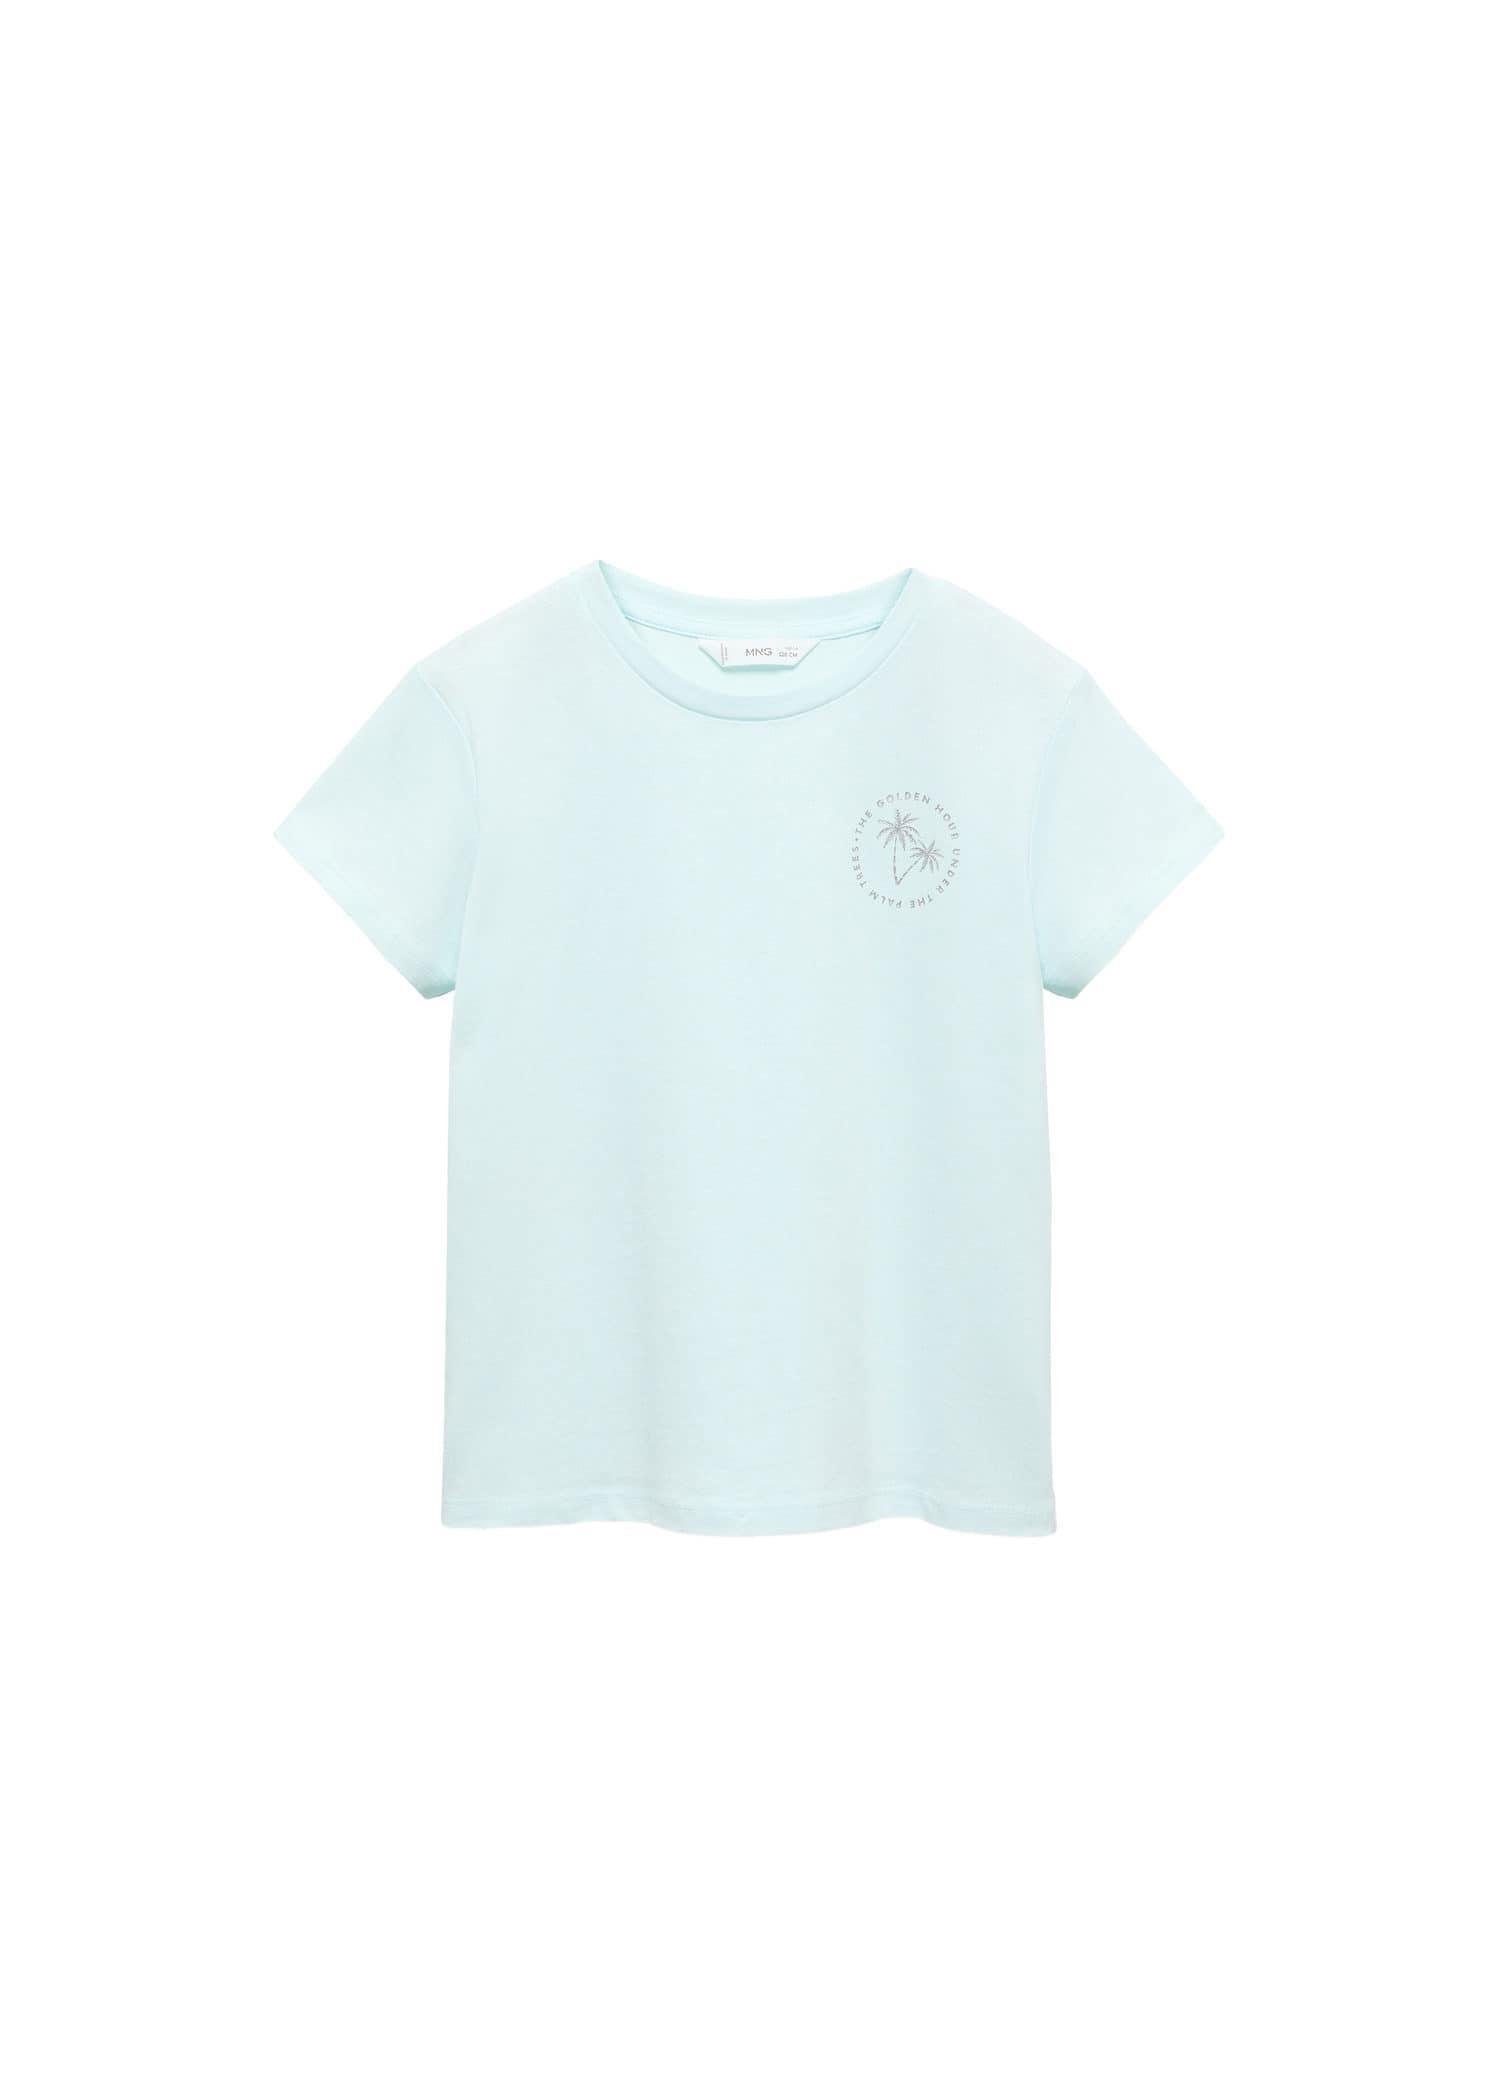 Mango - Blue Printed Message T-Shirt, Kids Girls